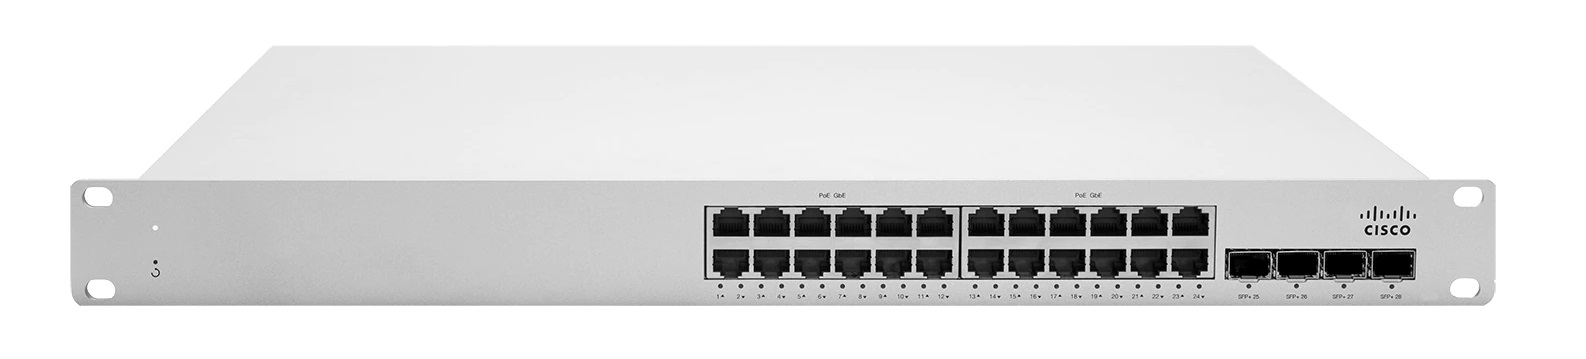 Cisco Meraki 24-port cloud-managed stackable enterprise-class access switch with four SFP+ uplinks